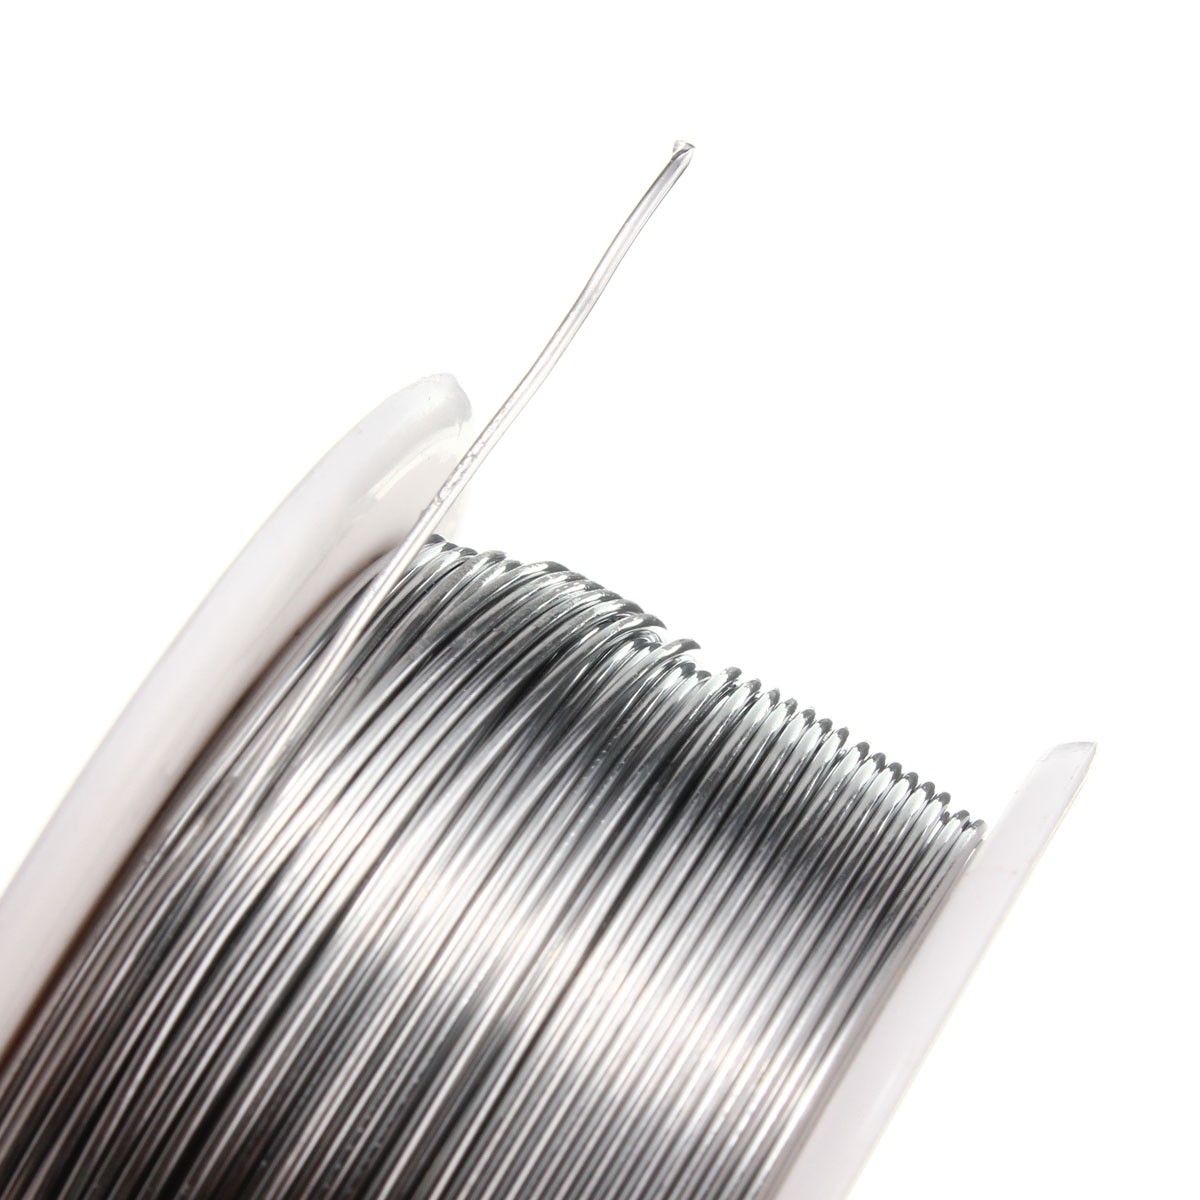 06mm-Tin-lead-Solder-Wire-Rosin-Core-Soldering-2-Flux-Reel-Tube-6040-985802